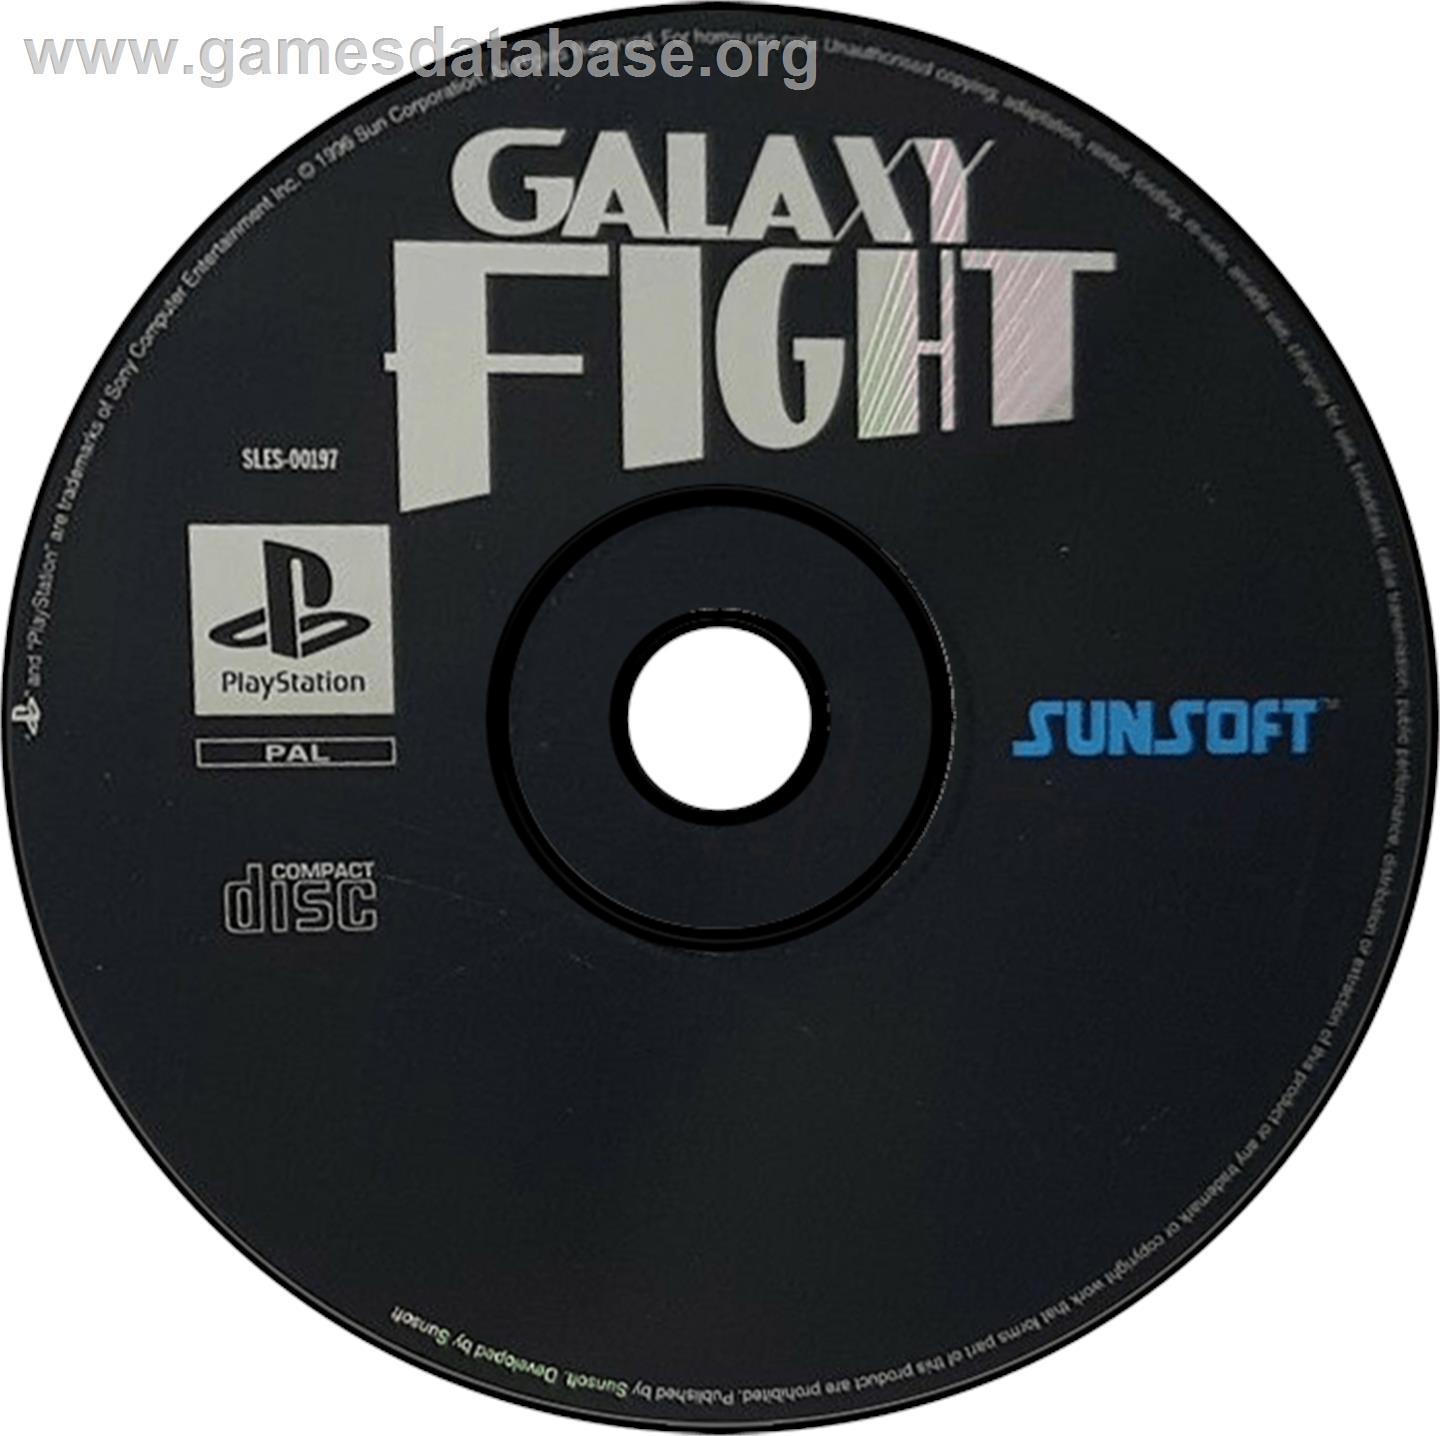 Galaxy Fight: Universal Warriors - Sony Playstation - Artwork - Disc